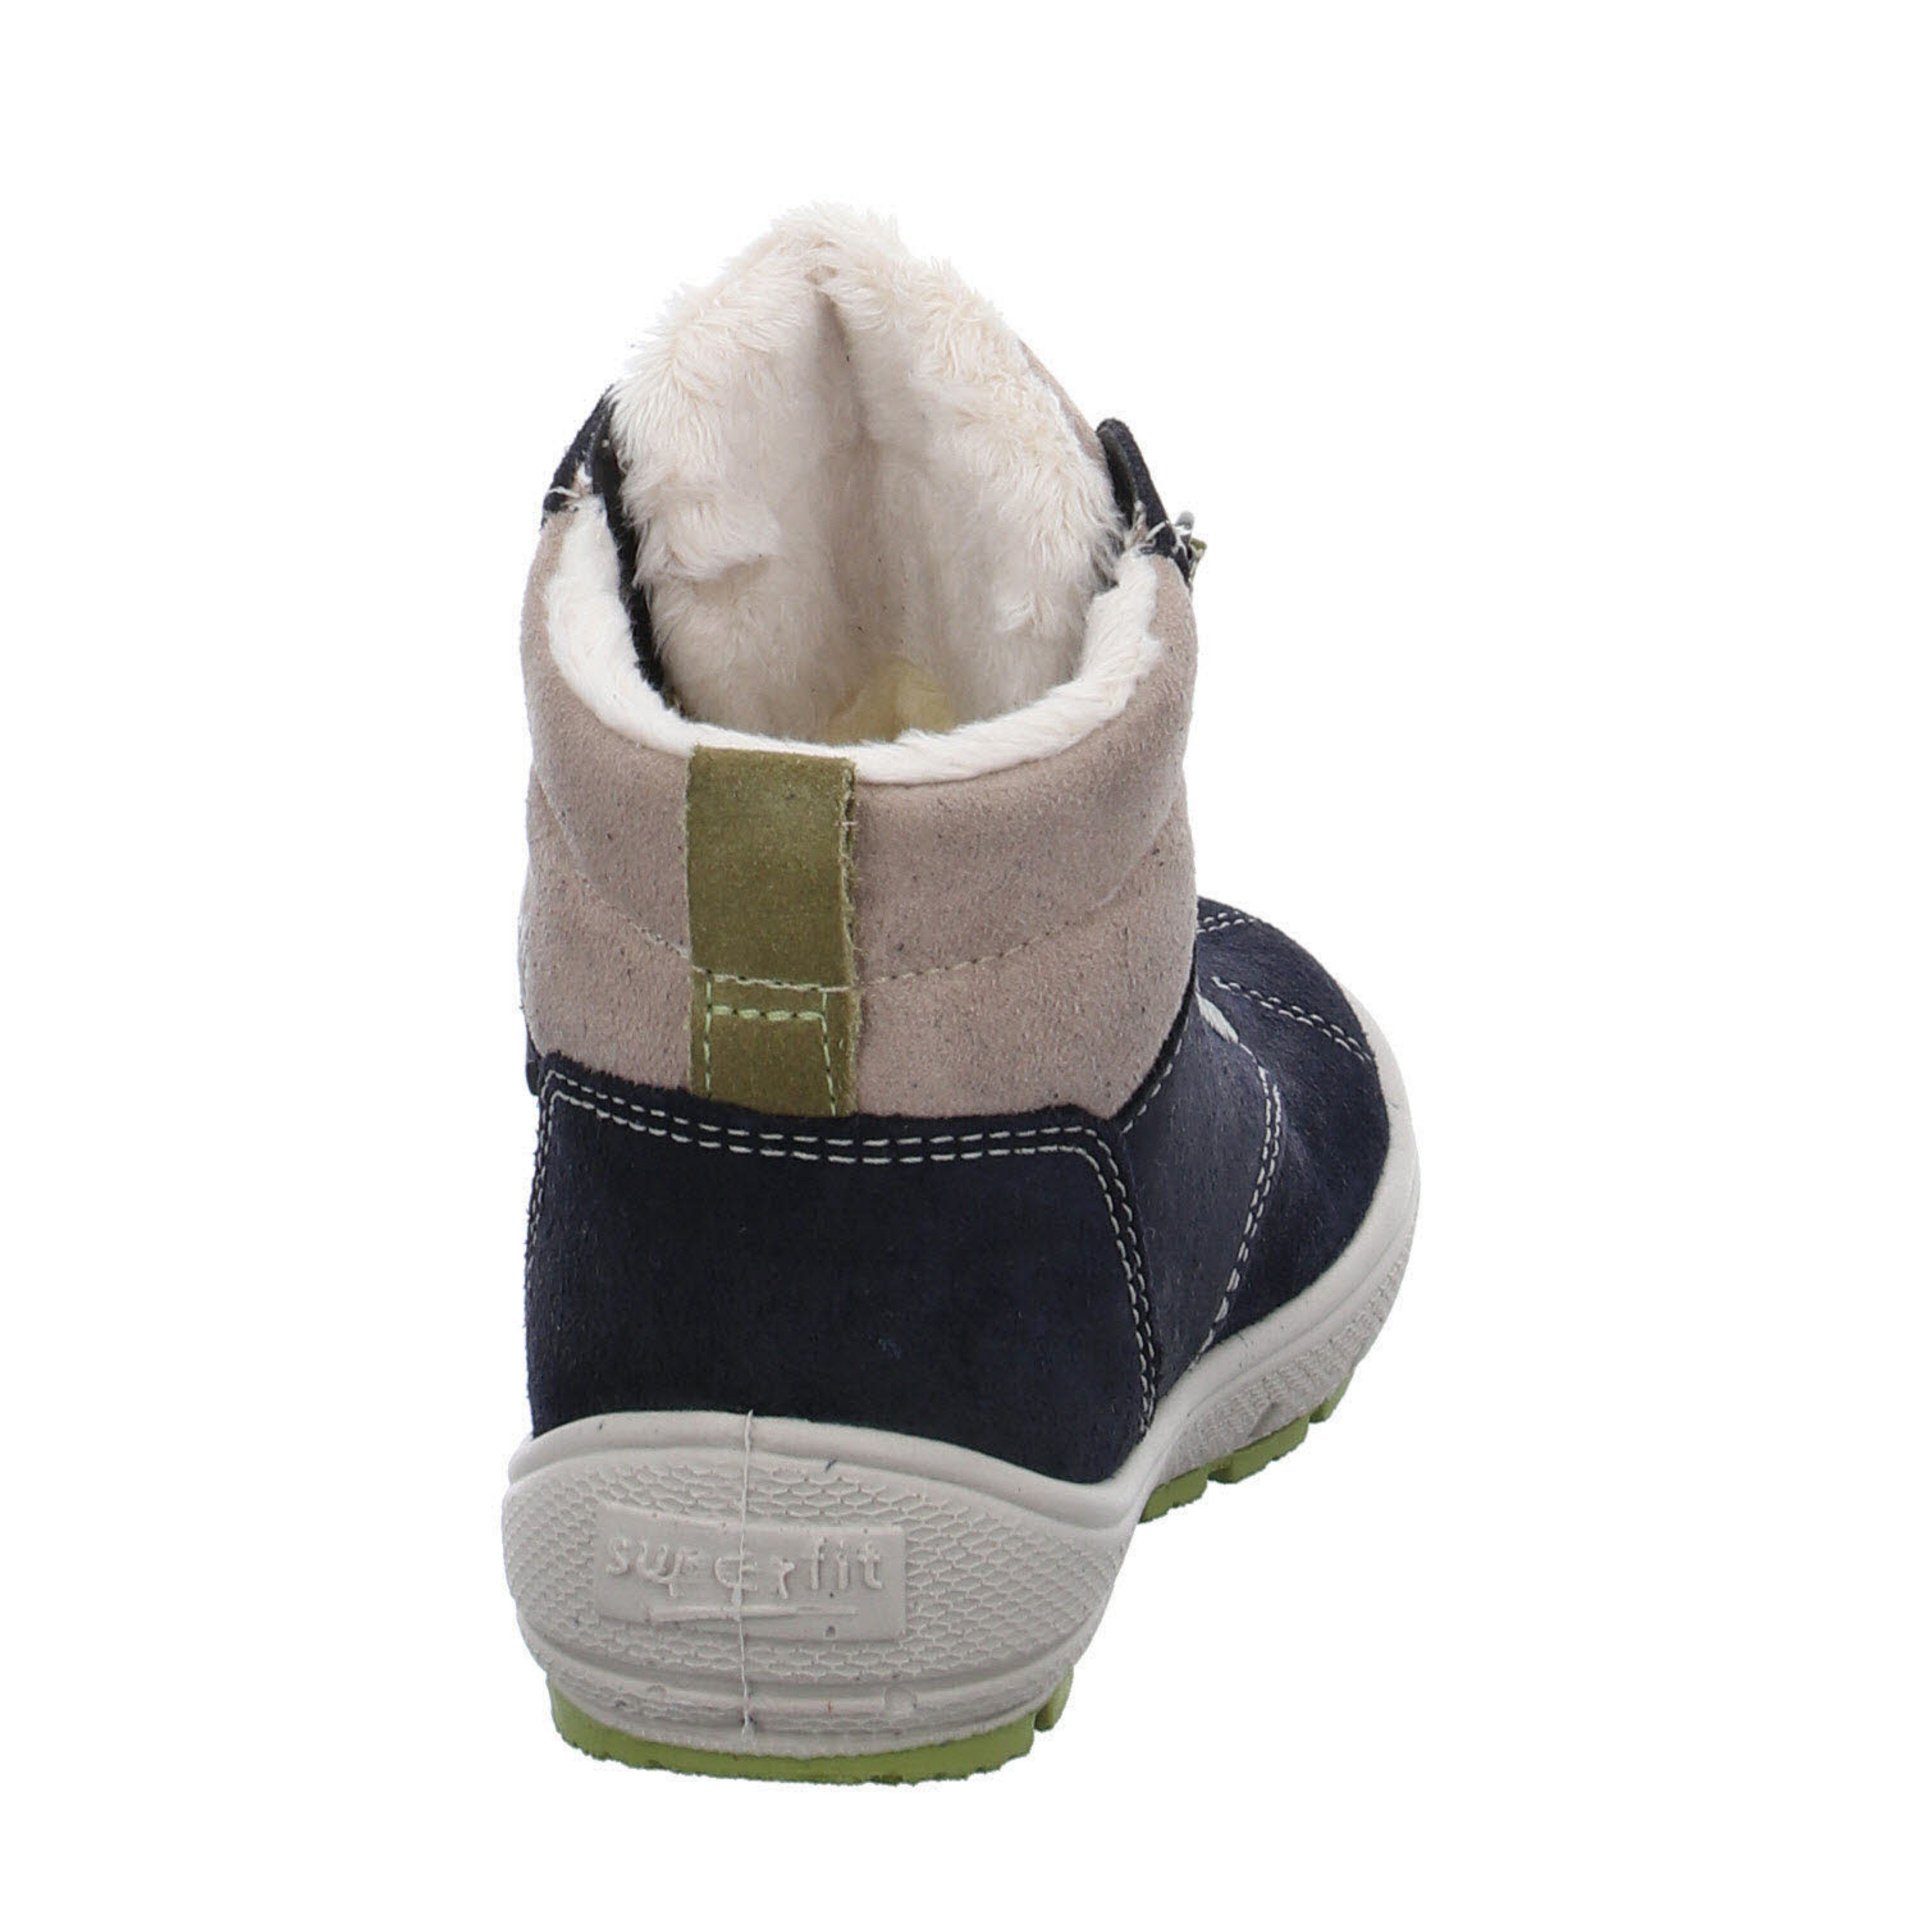 Lauflernschuhe Baby Leder-/Textilkombination Lauflernschuh Krabbelschuhe Boots Groovy Superfit